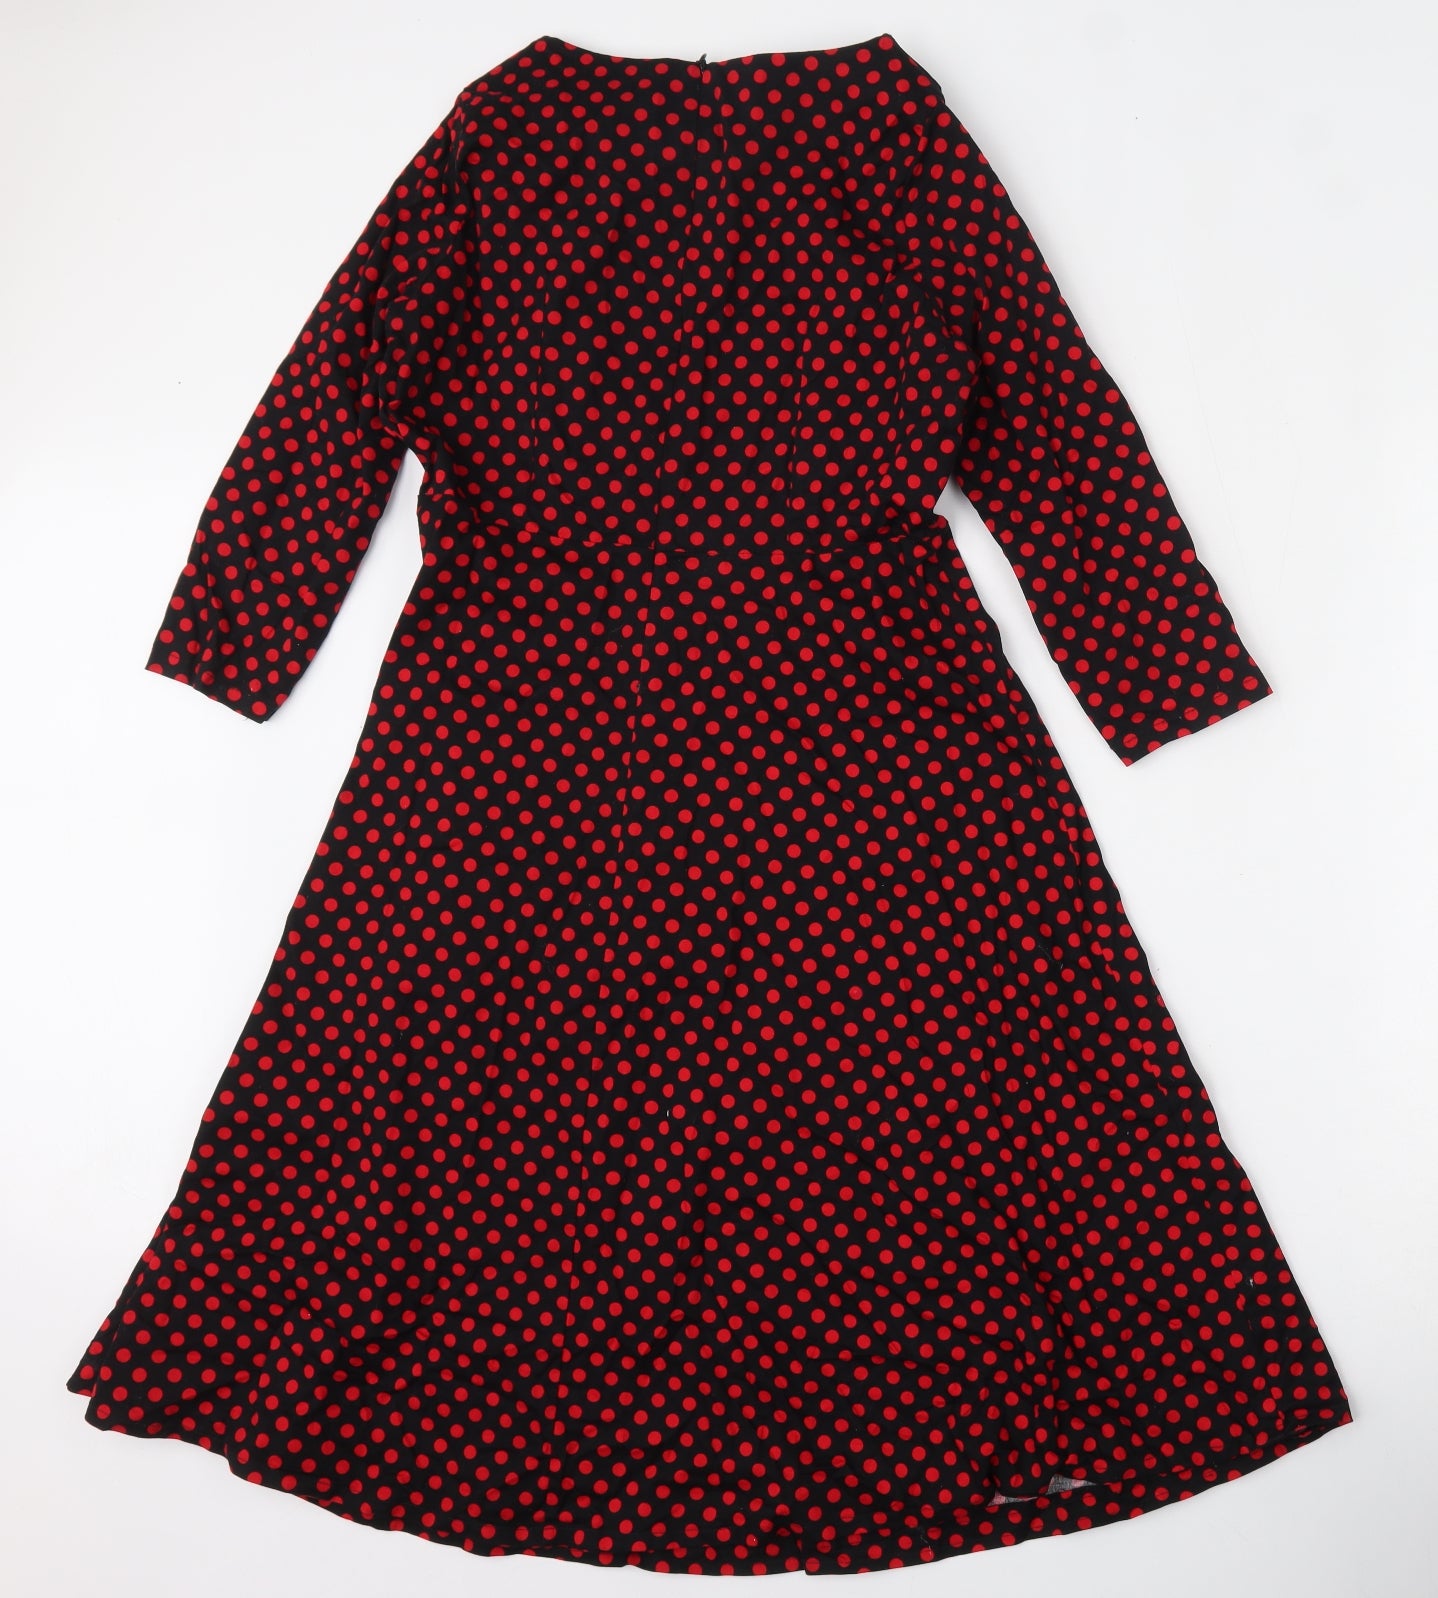 Zaful Womens Red Polka Dot Polyester Skater Dress  Size 2XL  Collared Zip